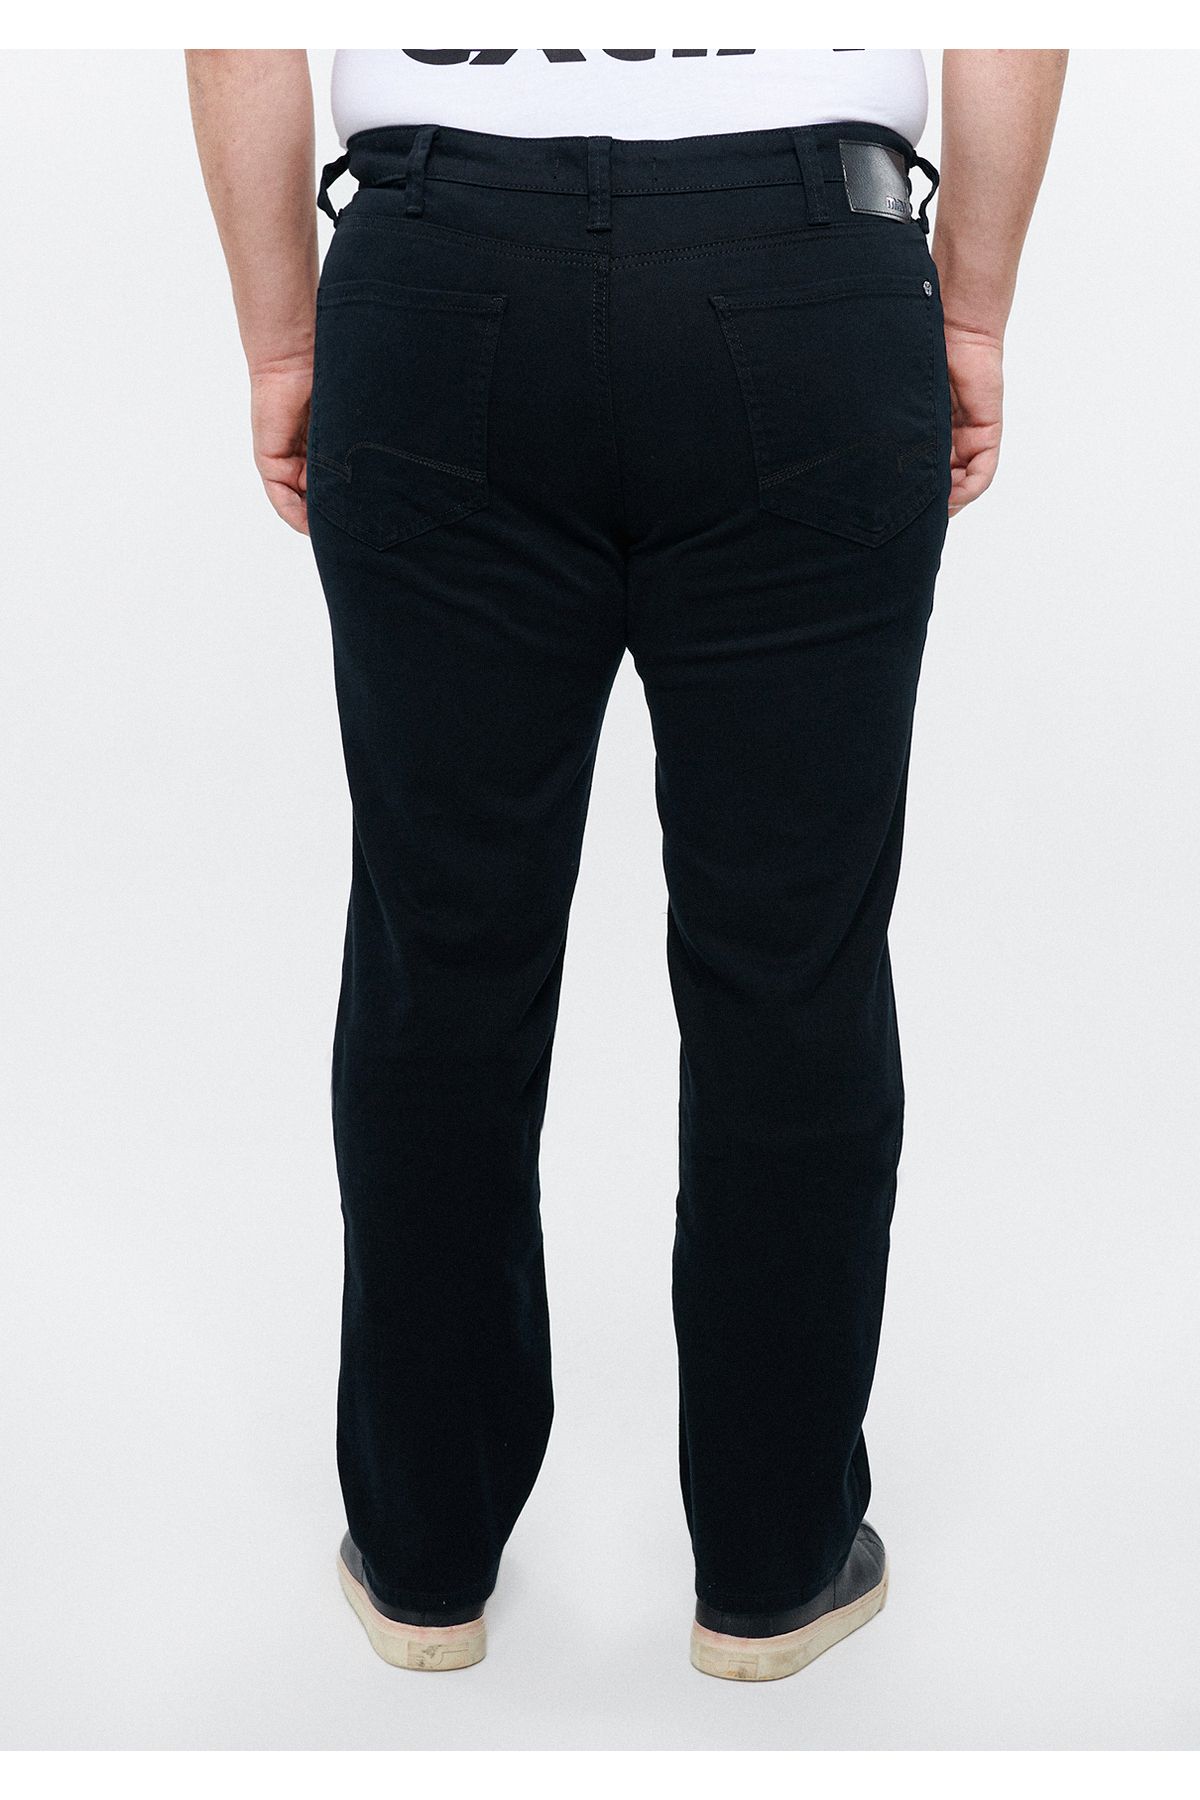 Mavi شلوار جین راحتی مشکی حسن 0006616291